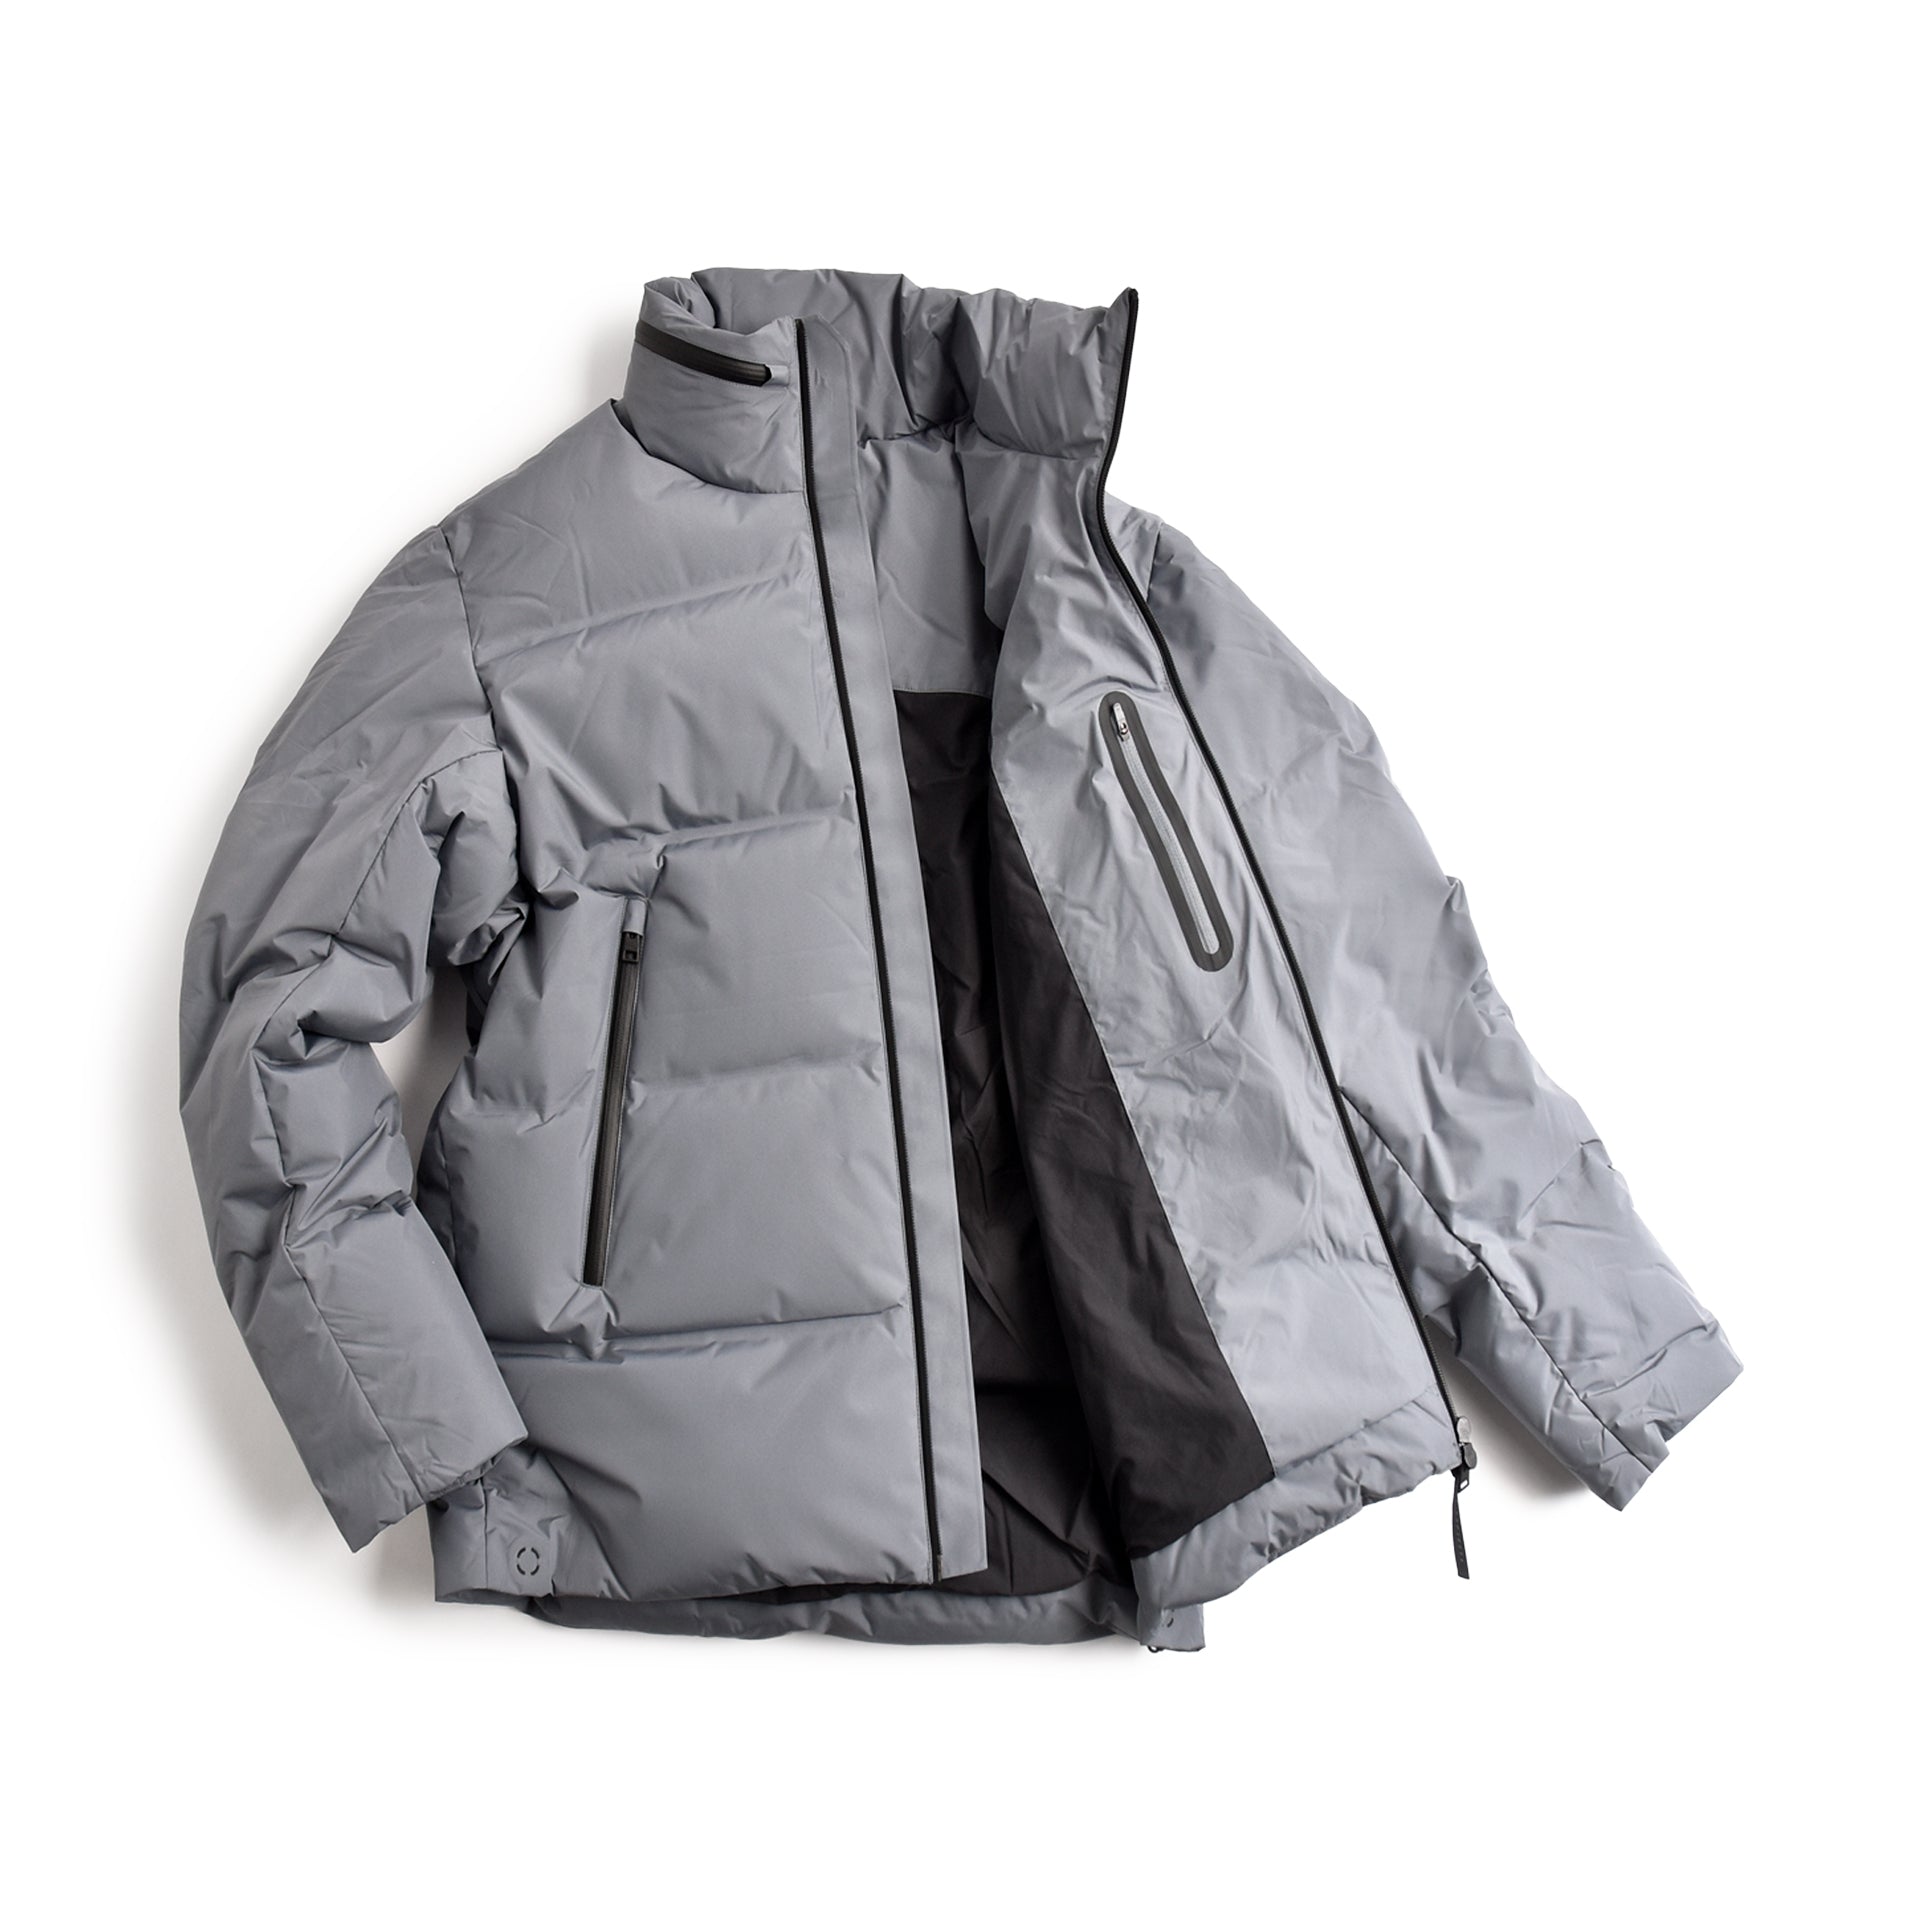 Woolrich Men’s Waterproof Down Jacket With Detachable, 52% OFF